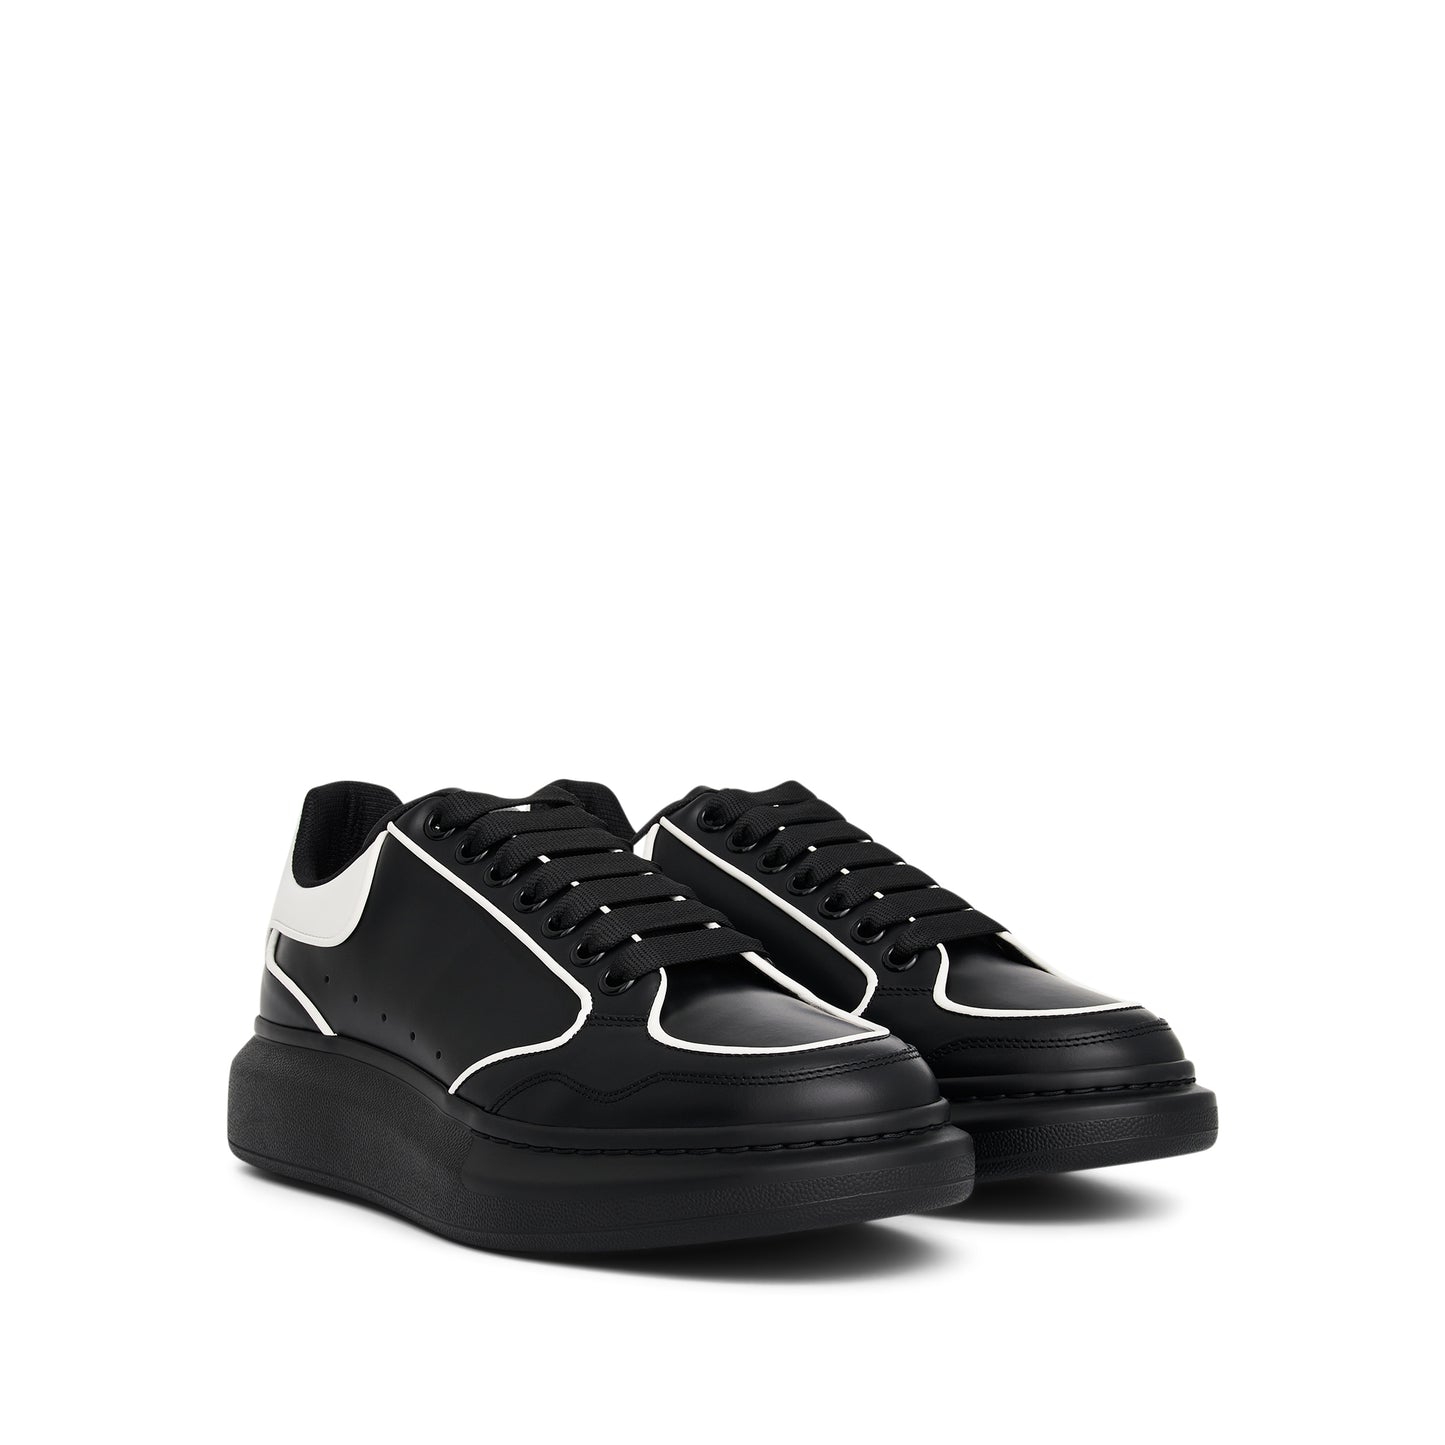 Larry Contrast Sneaker in Black/White